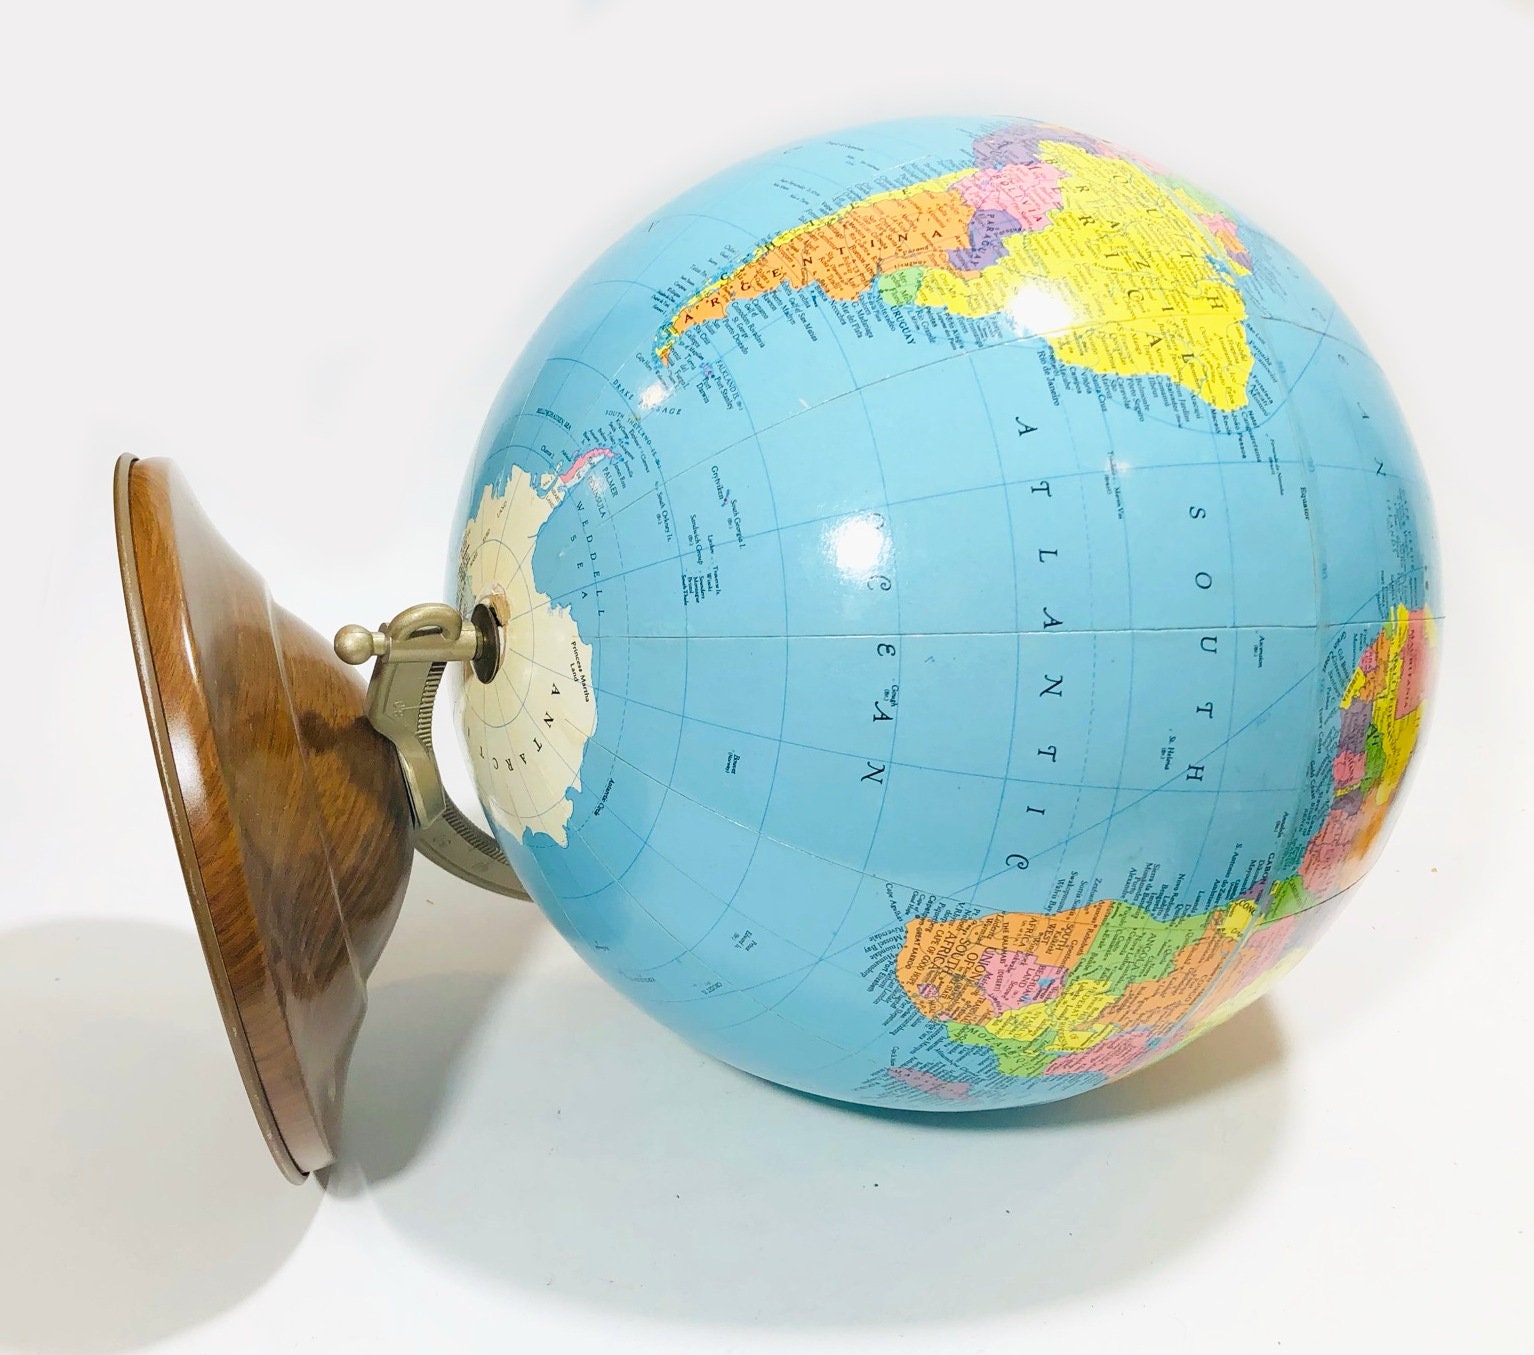 Replogle グローブ Replogle Globes Hexhedra Globe, Bronze Metallic Finish,  12Inch Diameter 37539 (並行輸入)